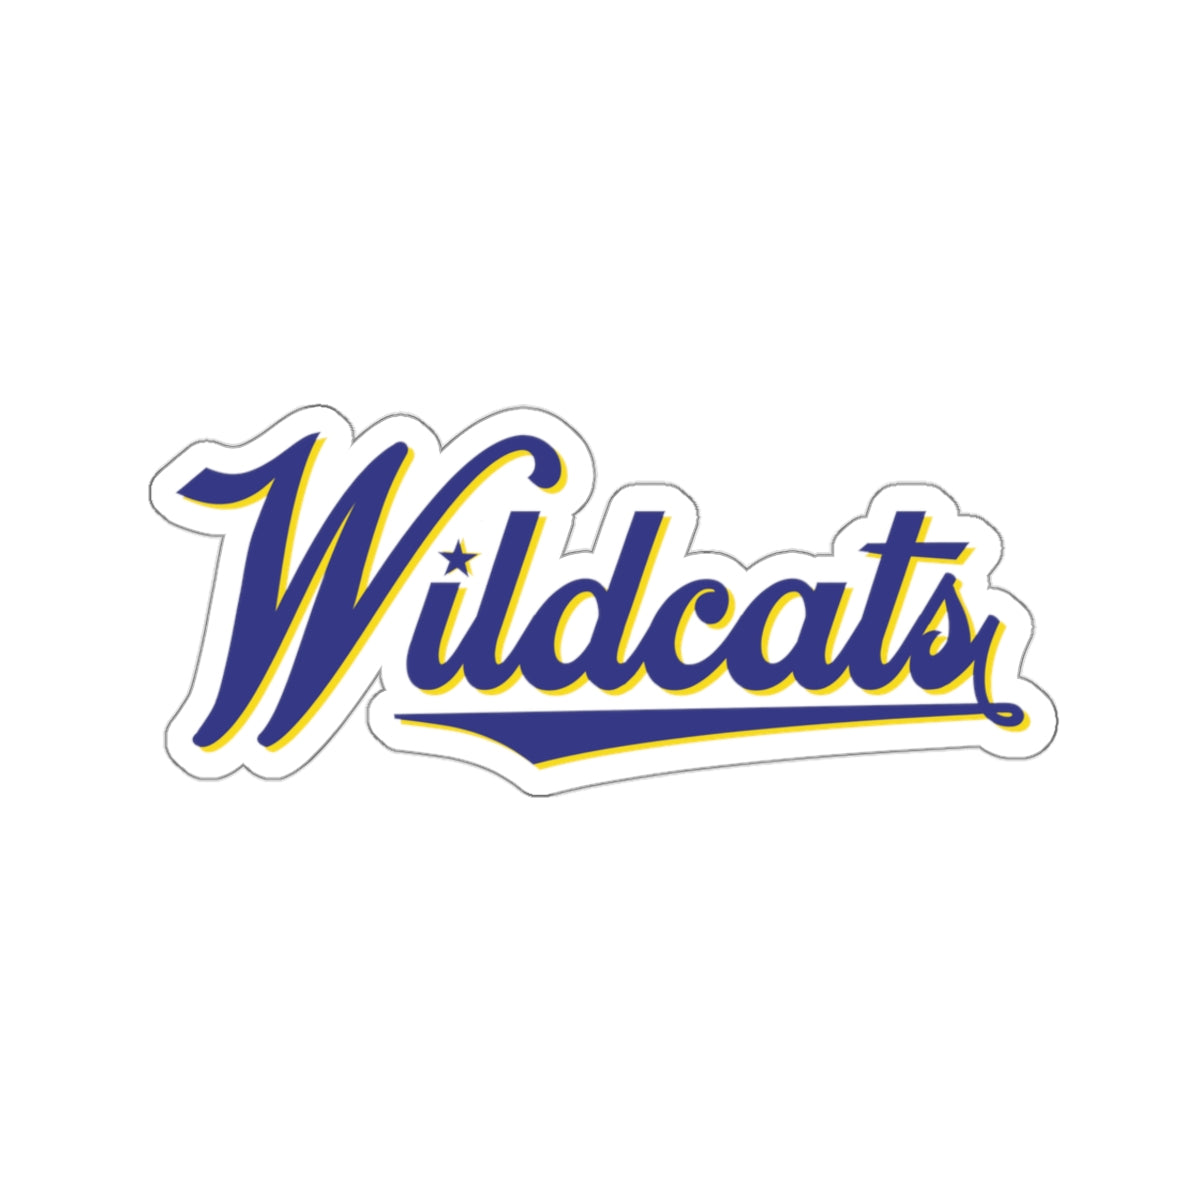 Wildcat Star Kiss-Cut Sticker - Not waterproof